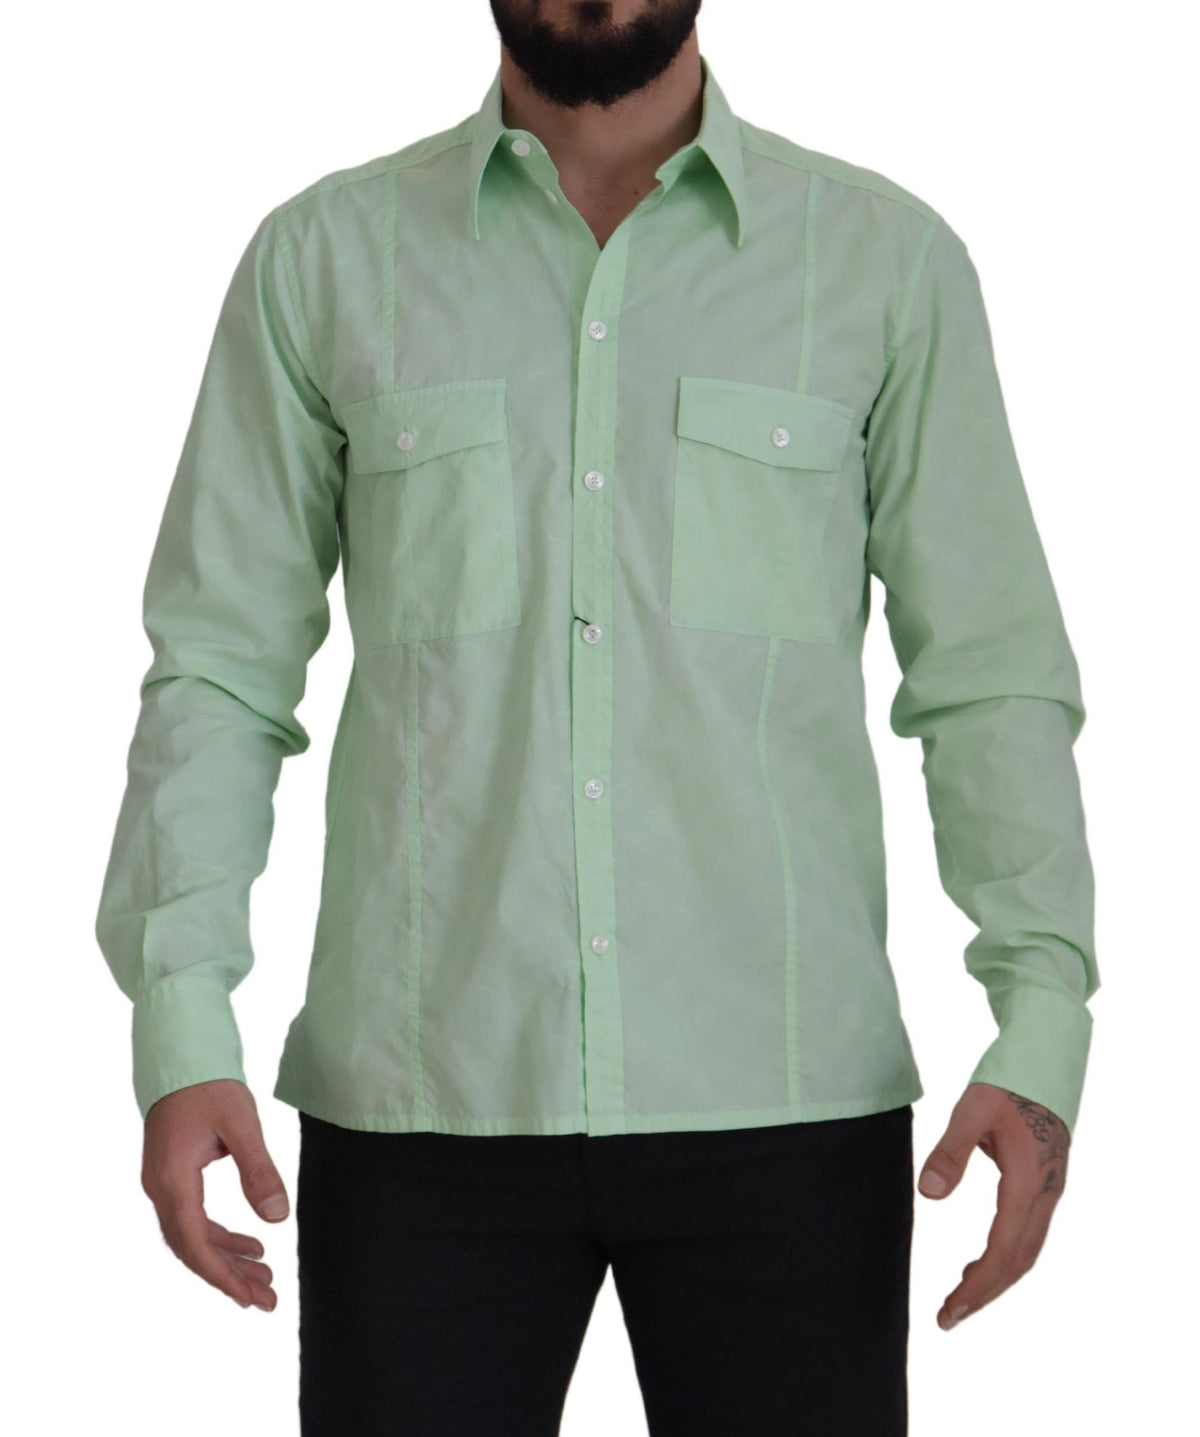 Dolce & Gabbana Mint Green Slim Fit Casual Button-Down Shirt